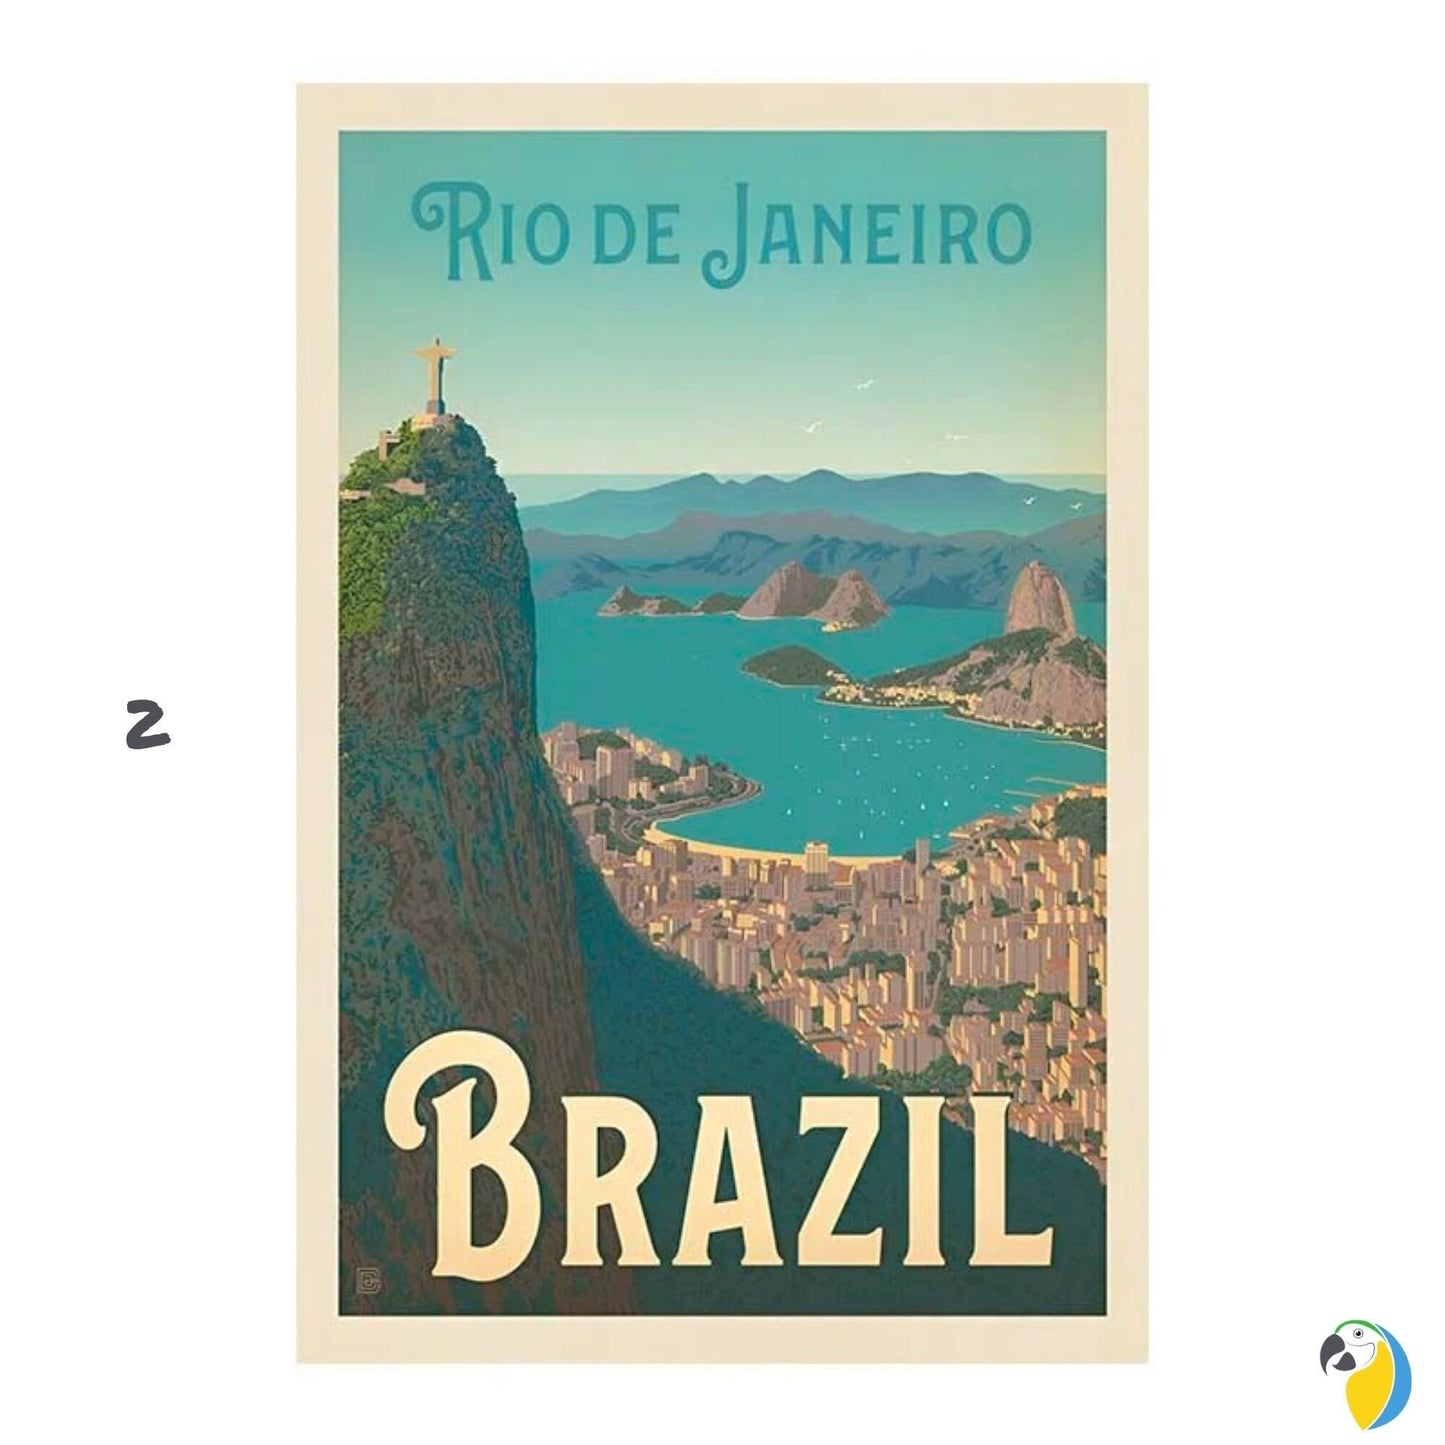 Vintage Brazil Travel Poster Canvas • Rio De Janeiro Landscape Illustration Wall Art • Brazilian Christ Redeemer Landmark Digital Print • Papagaio Studio Etsy Shop